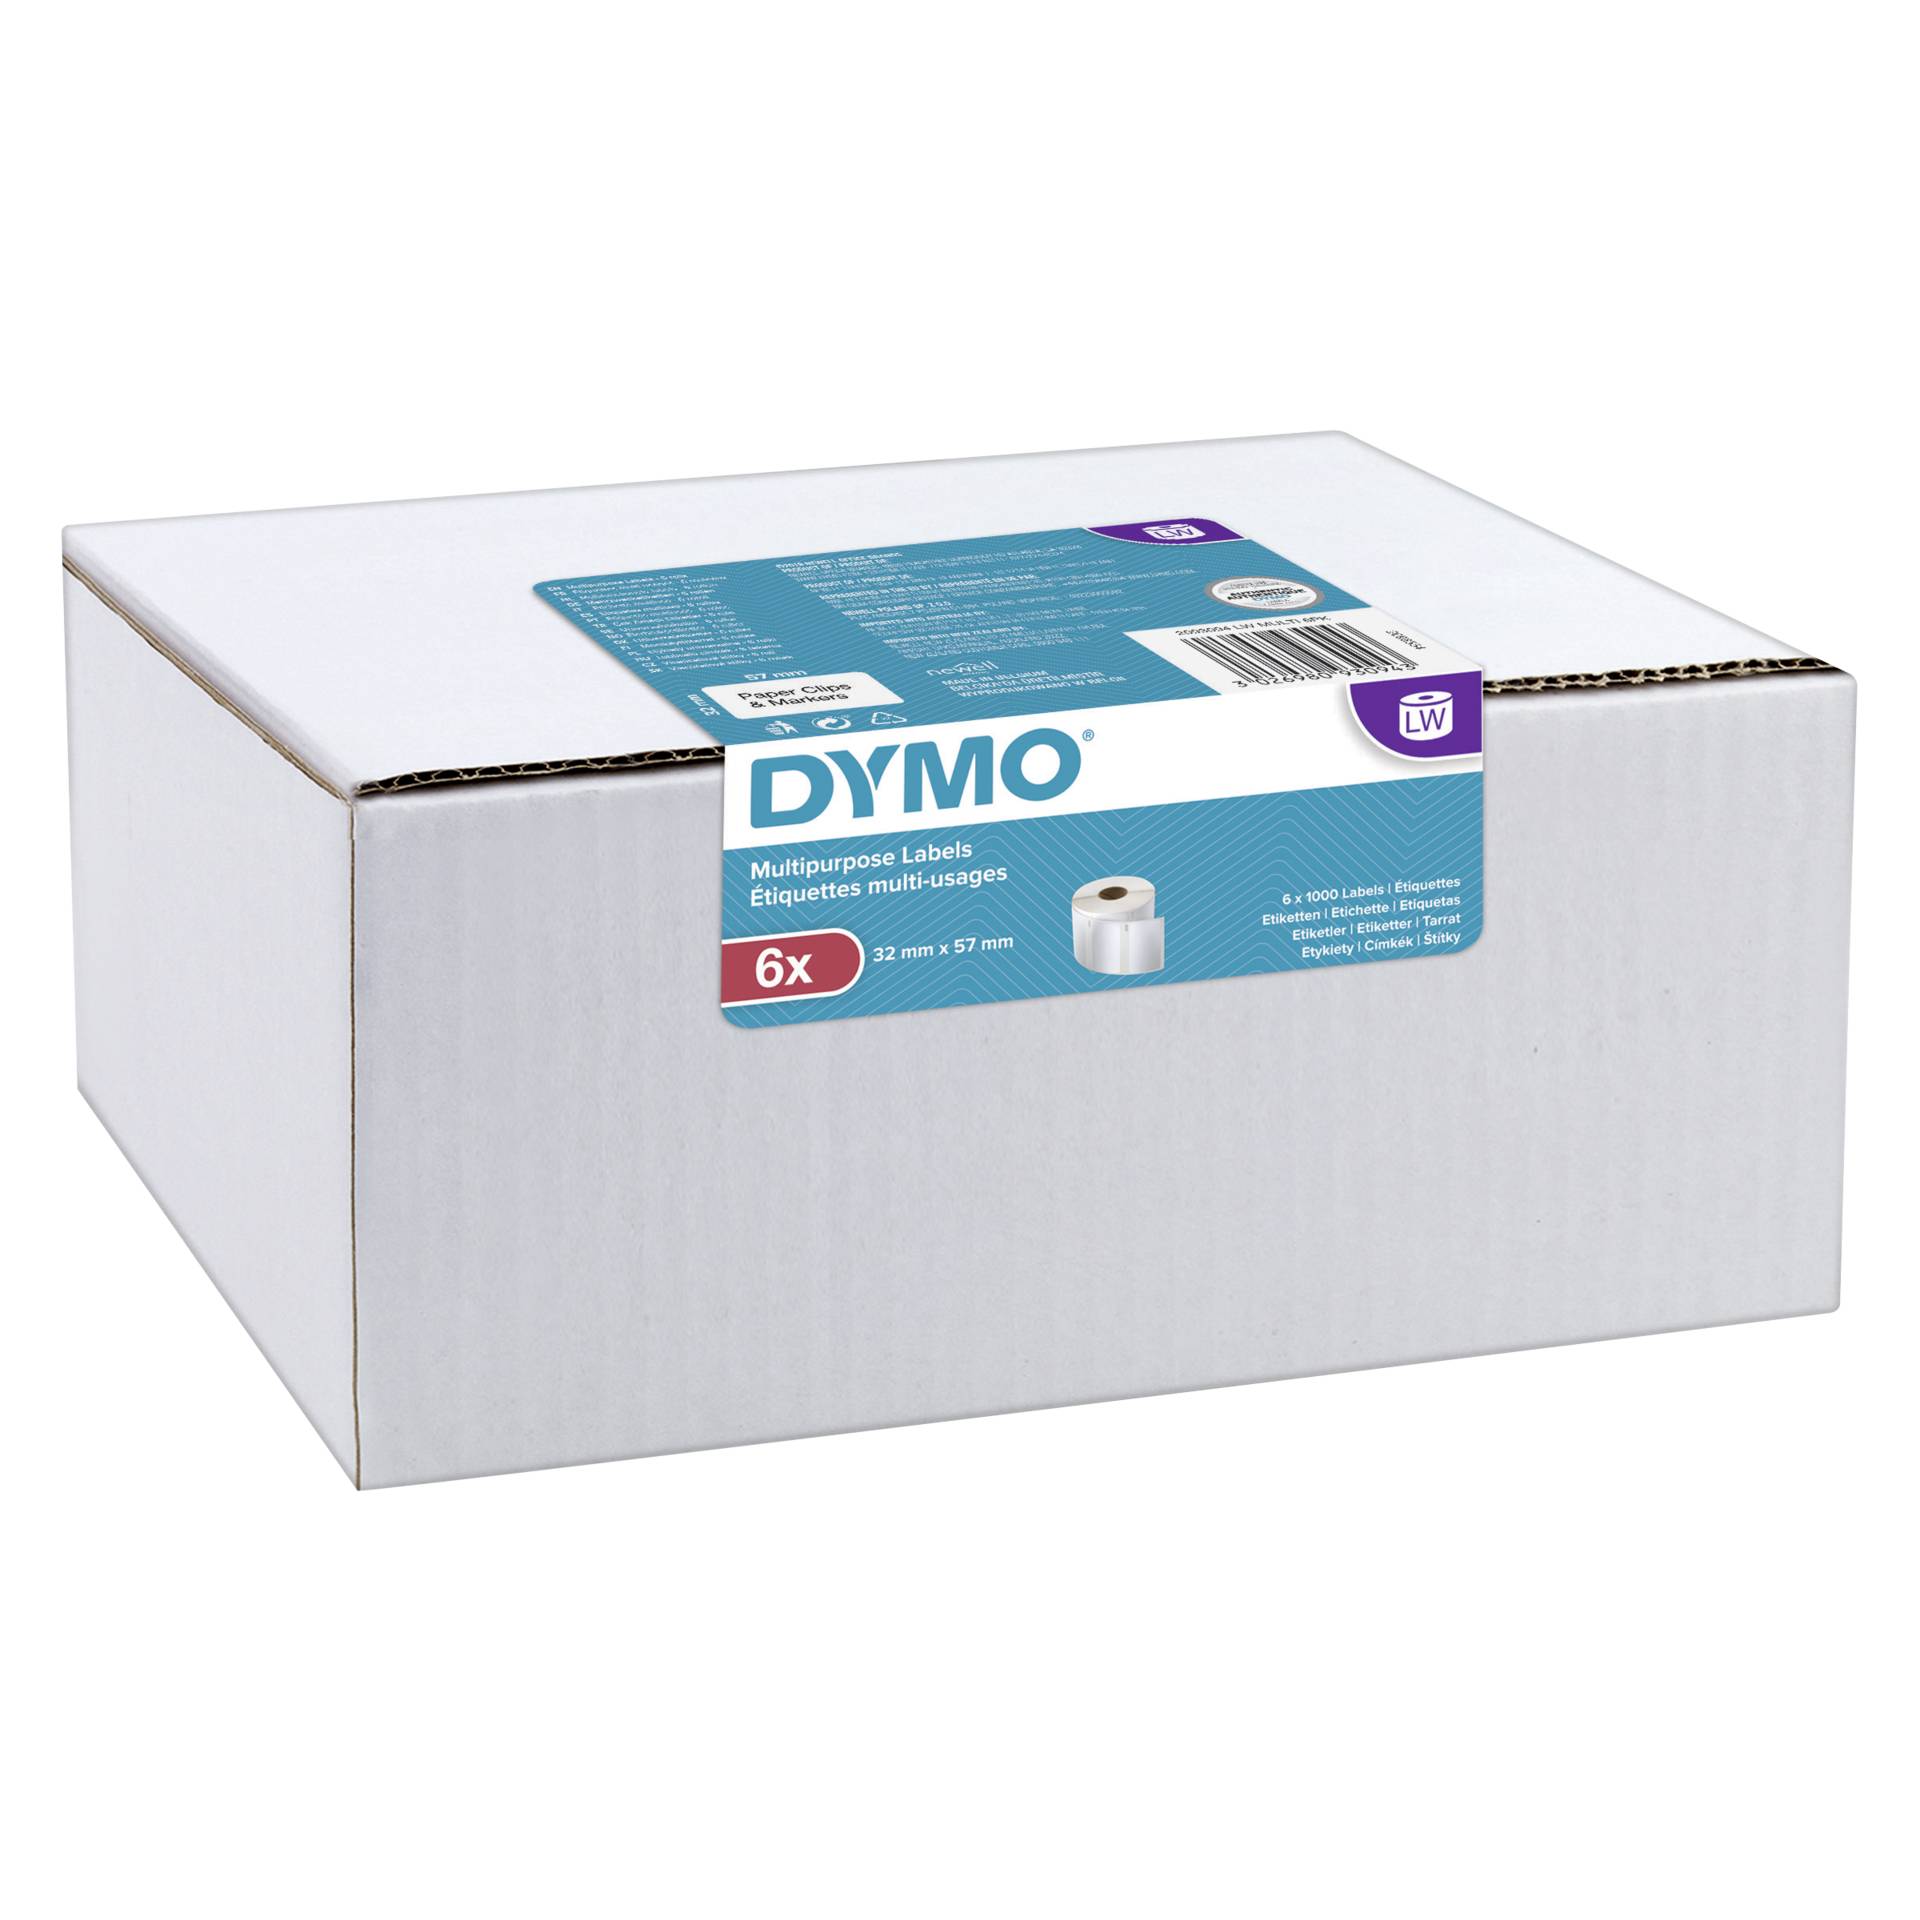 Dymo etichette multiuso 32 x 57 mm bianco 6x 1000 pz.